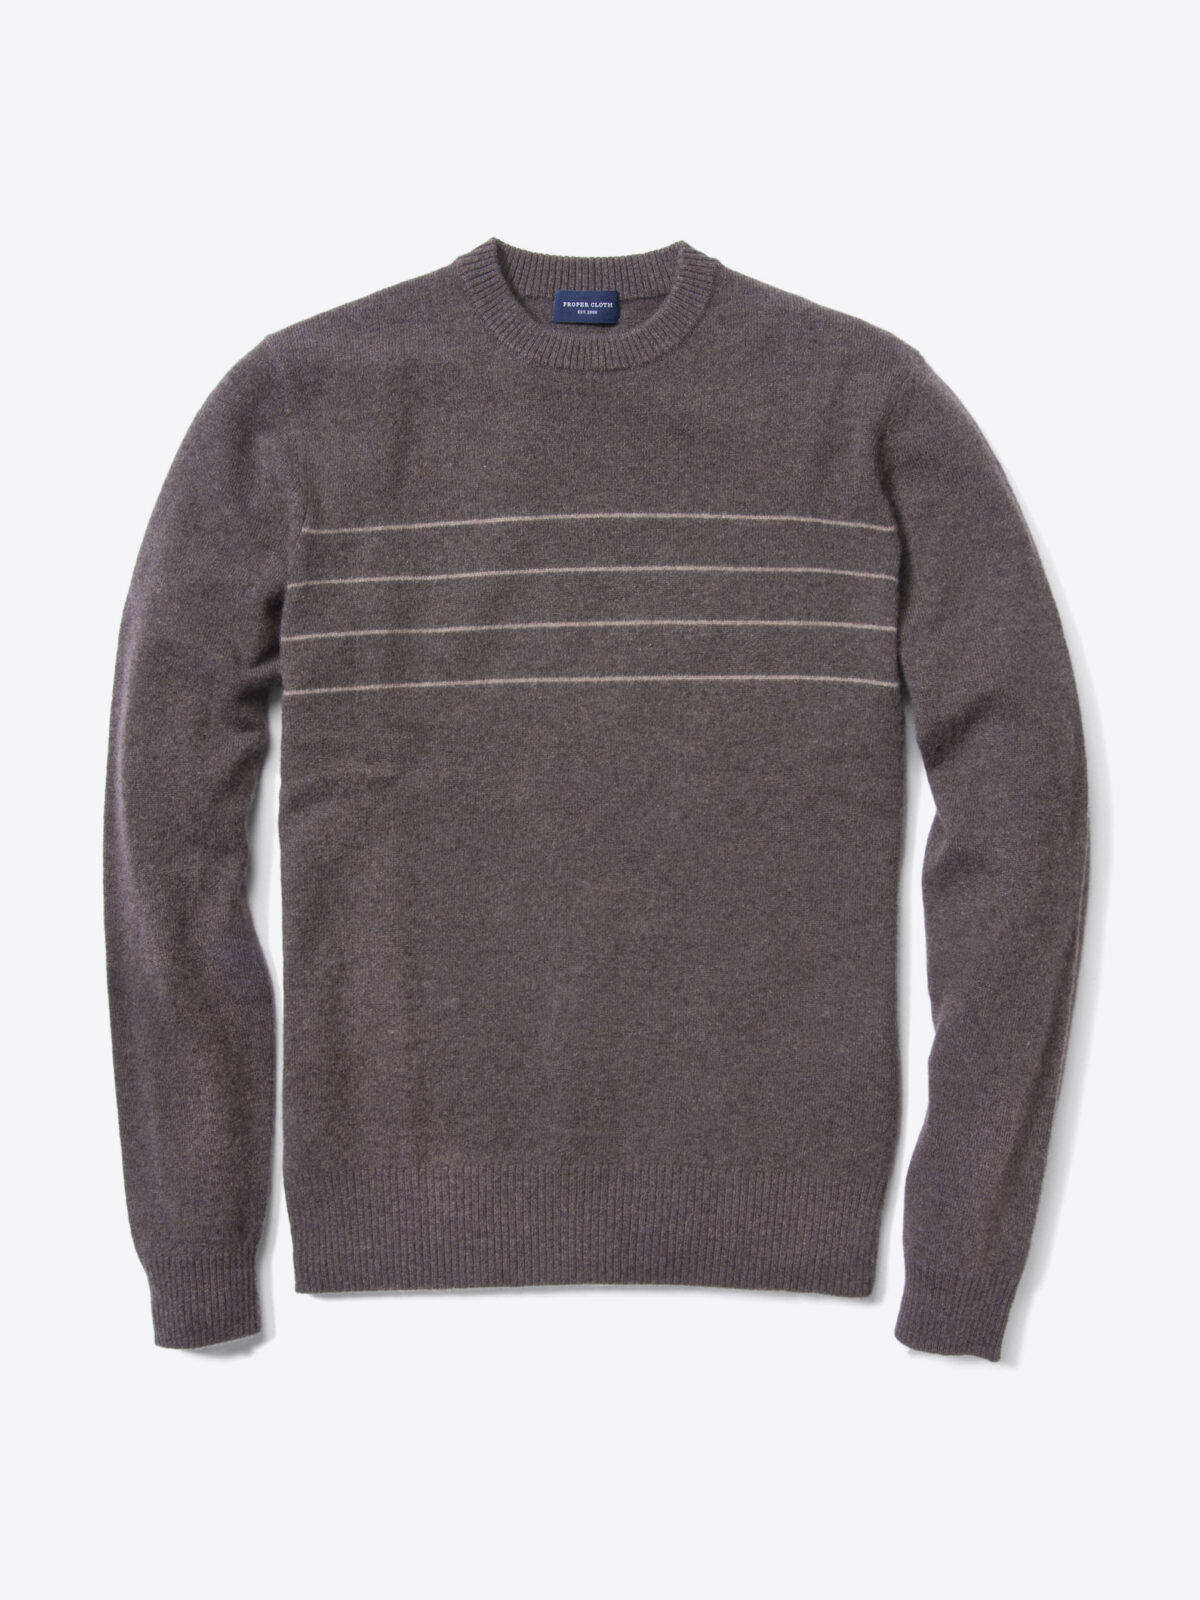 Brown and Tan Stripe Cashmere Sweater